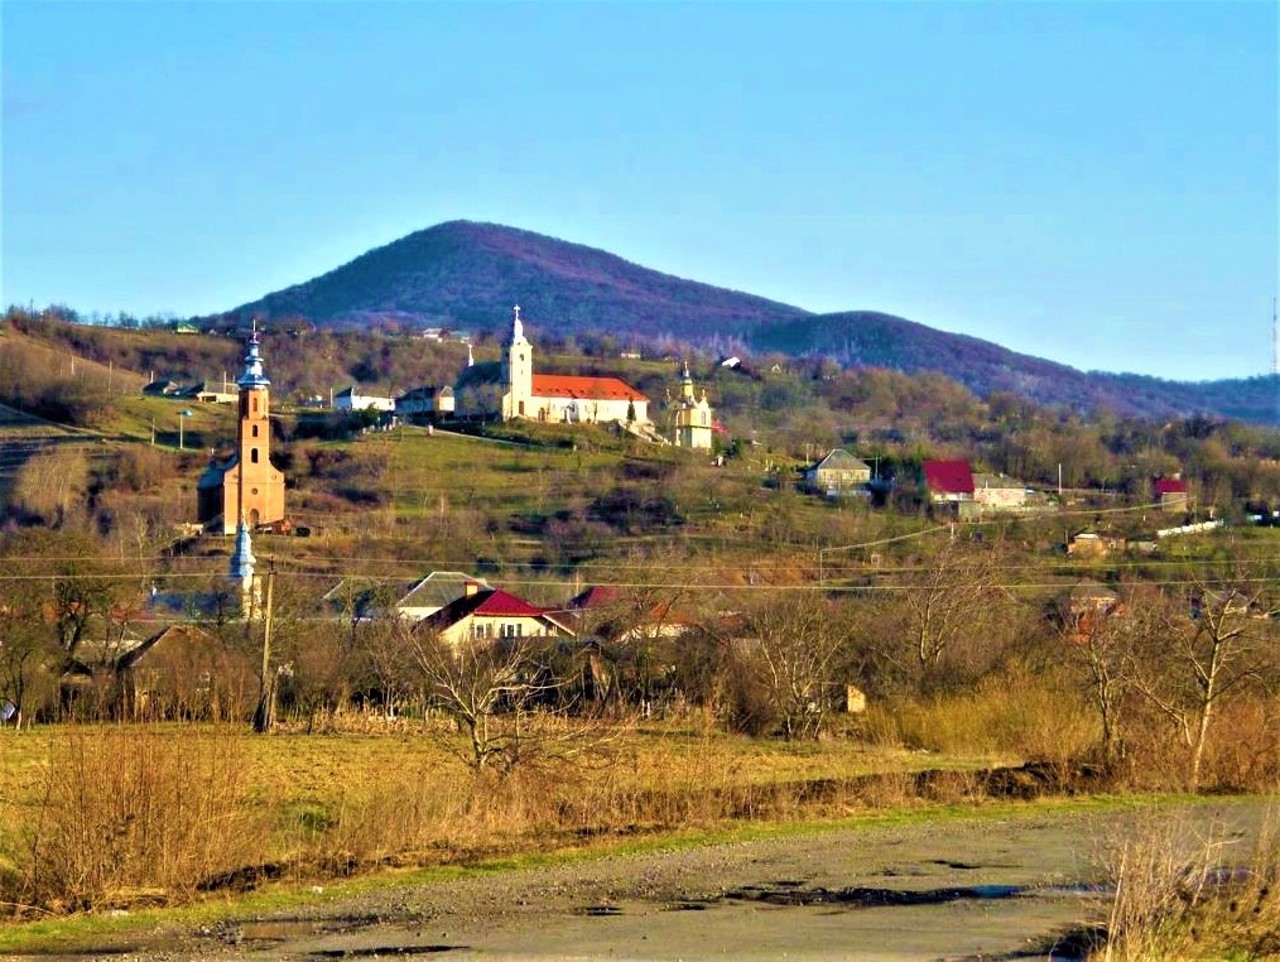 Imstychovo village